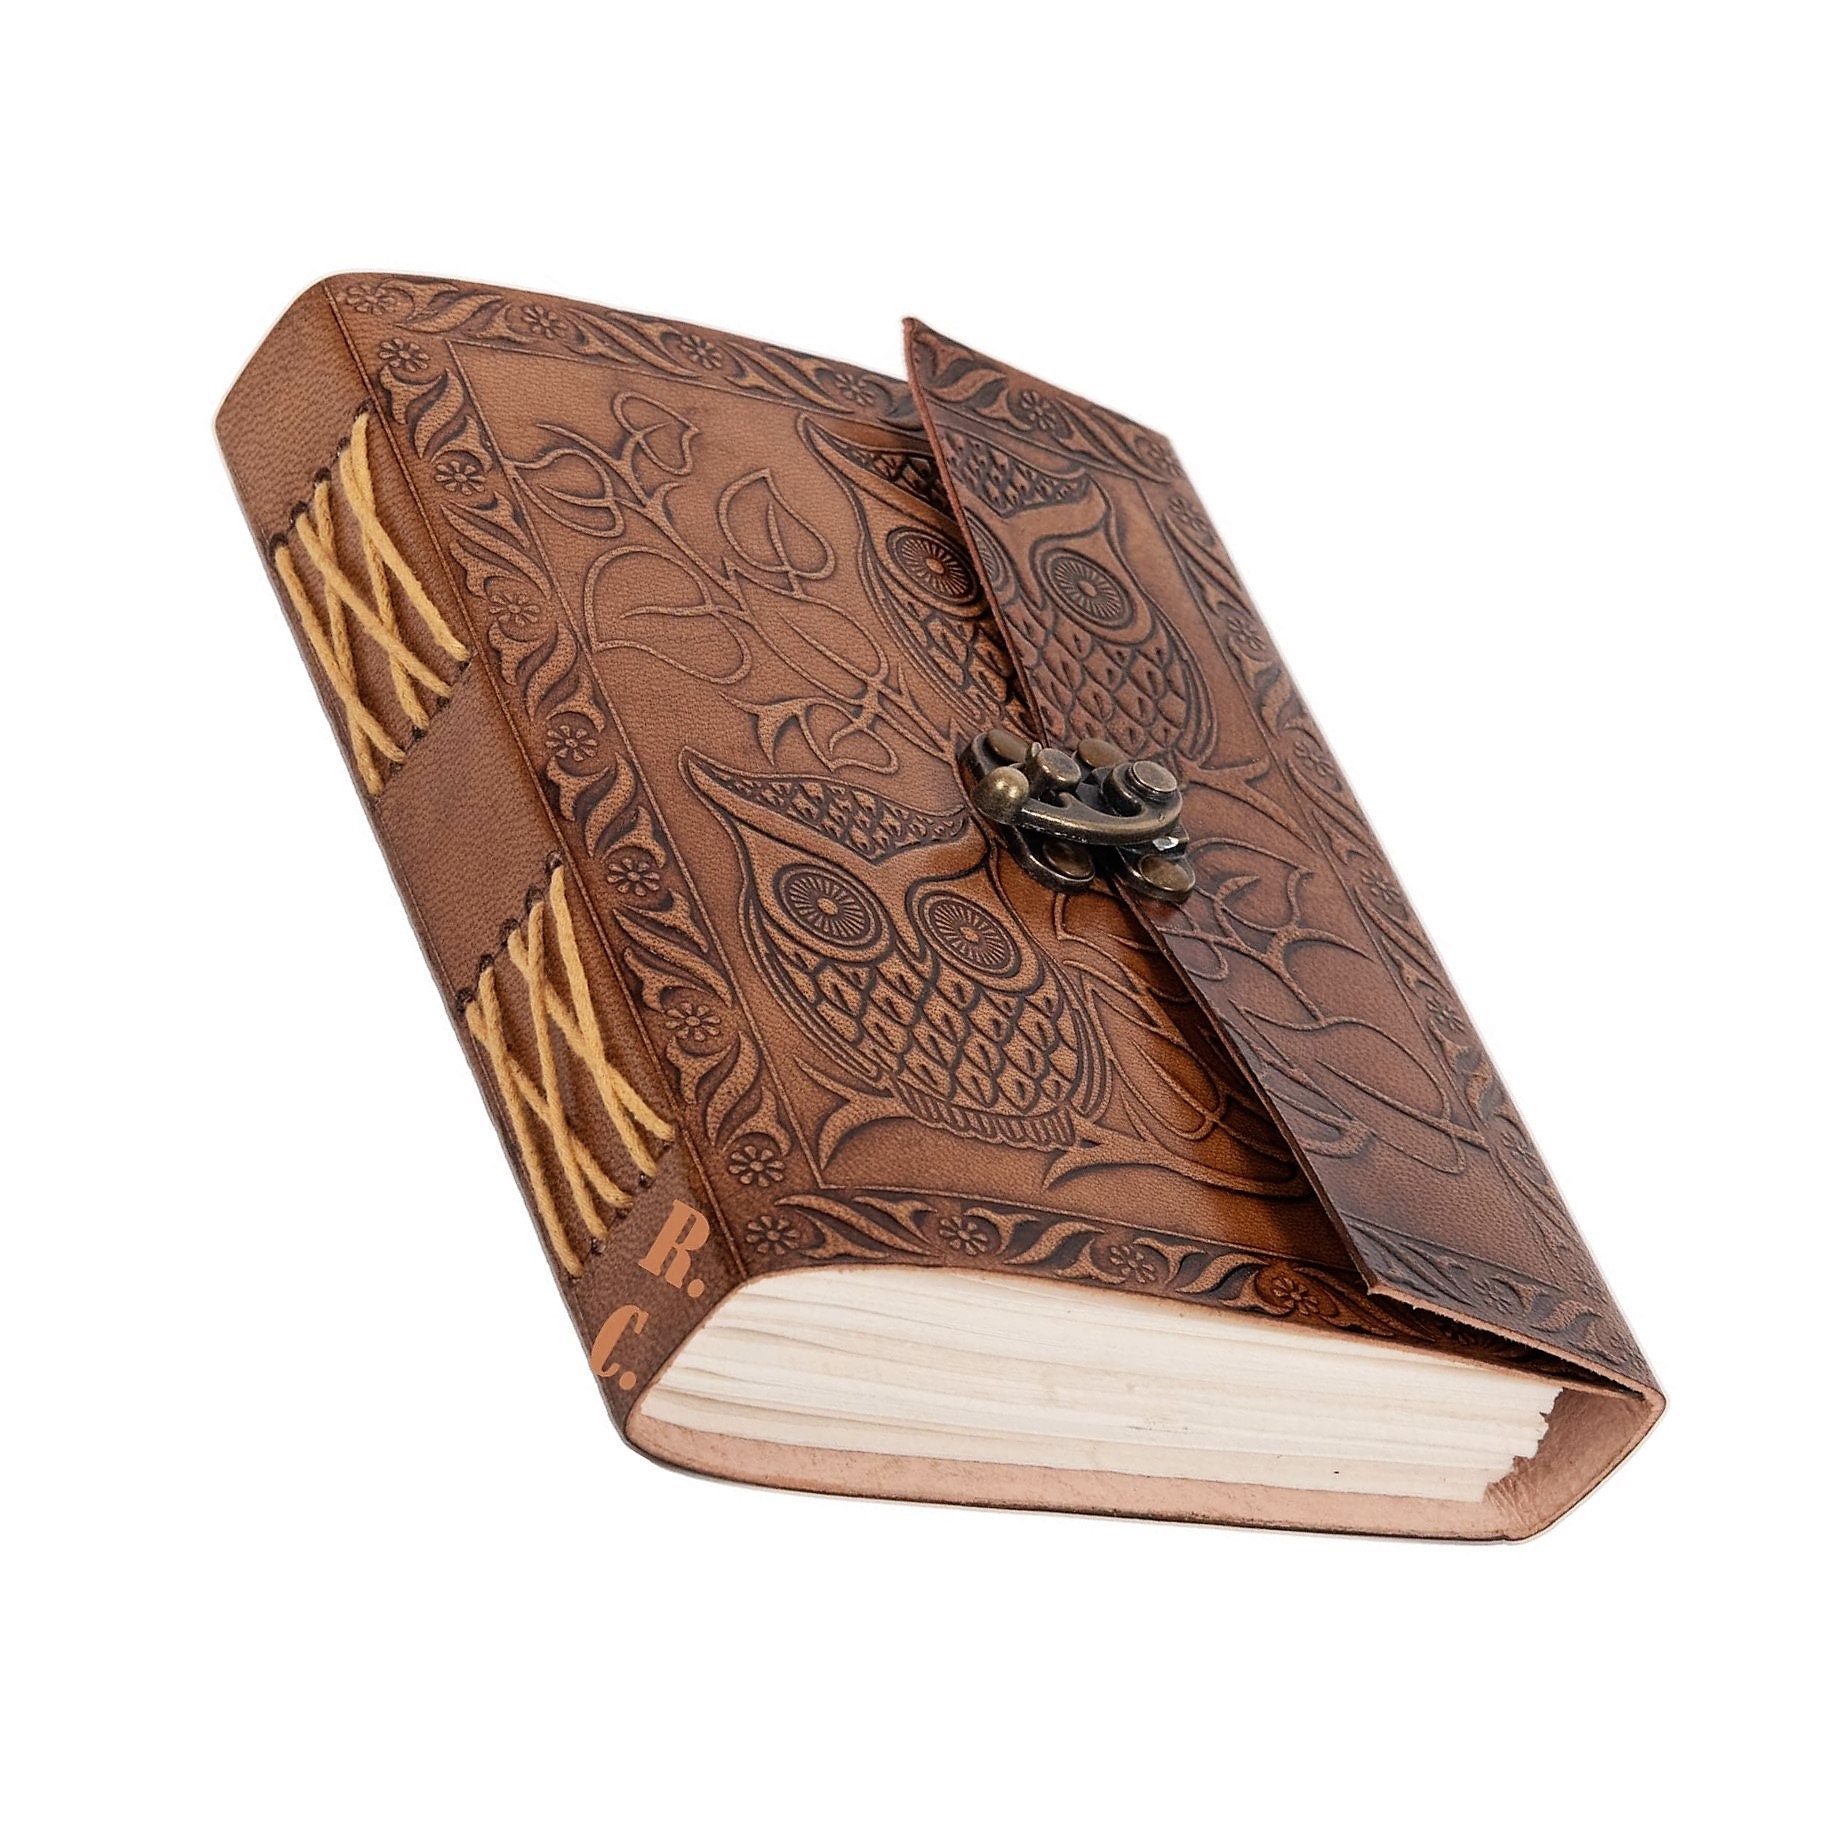 75% Off Handmade Leather owl Journal, Handmade Leather Journal, Rustic Notebook, Travel Diary, Writi